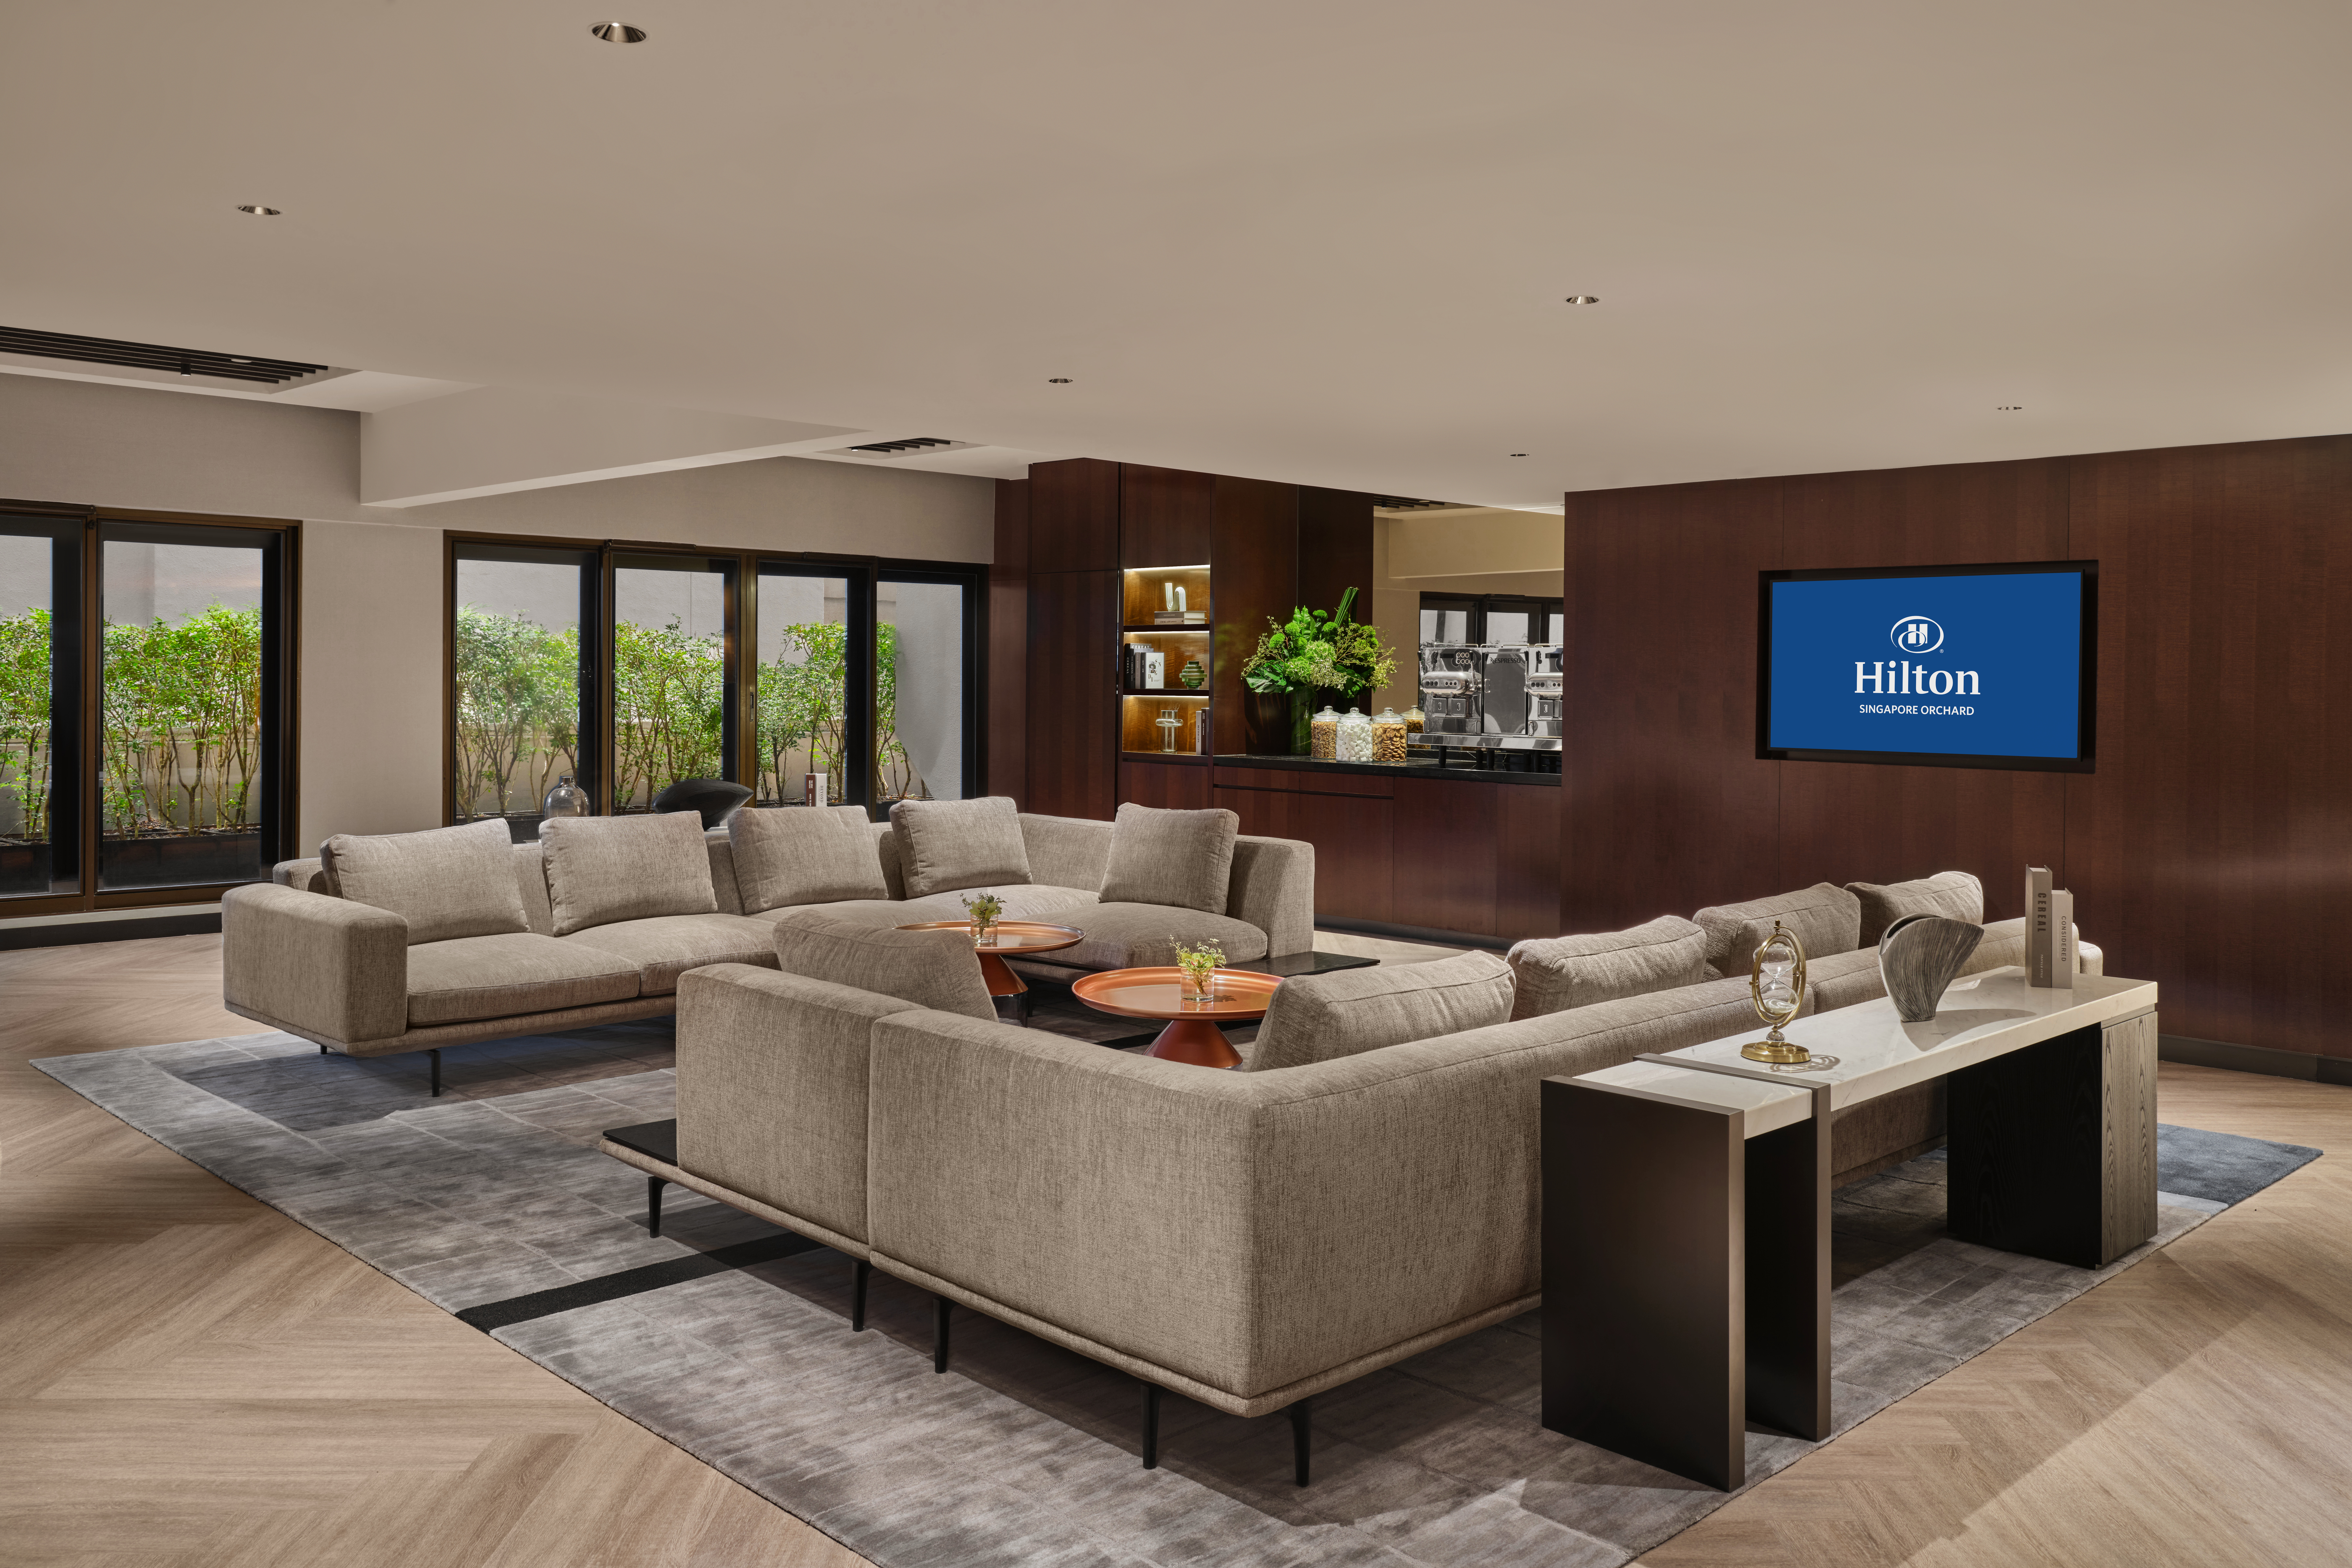 Hilton Singapore Orchard unveils new ‘Smart Studio’ meeting space